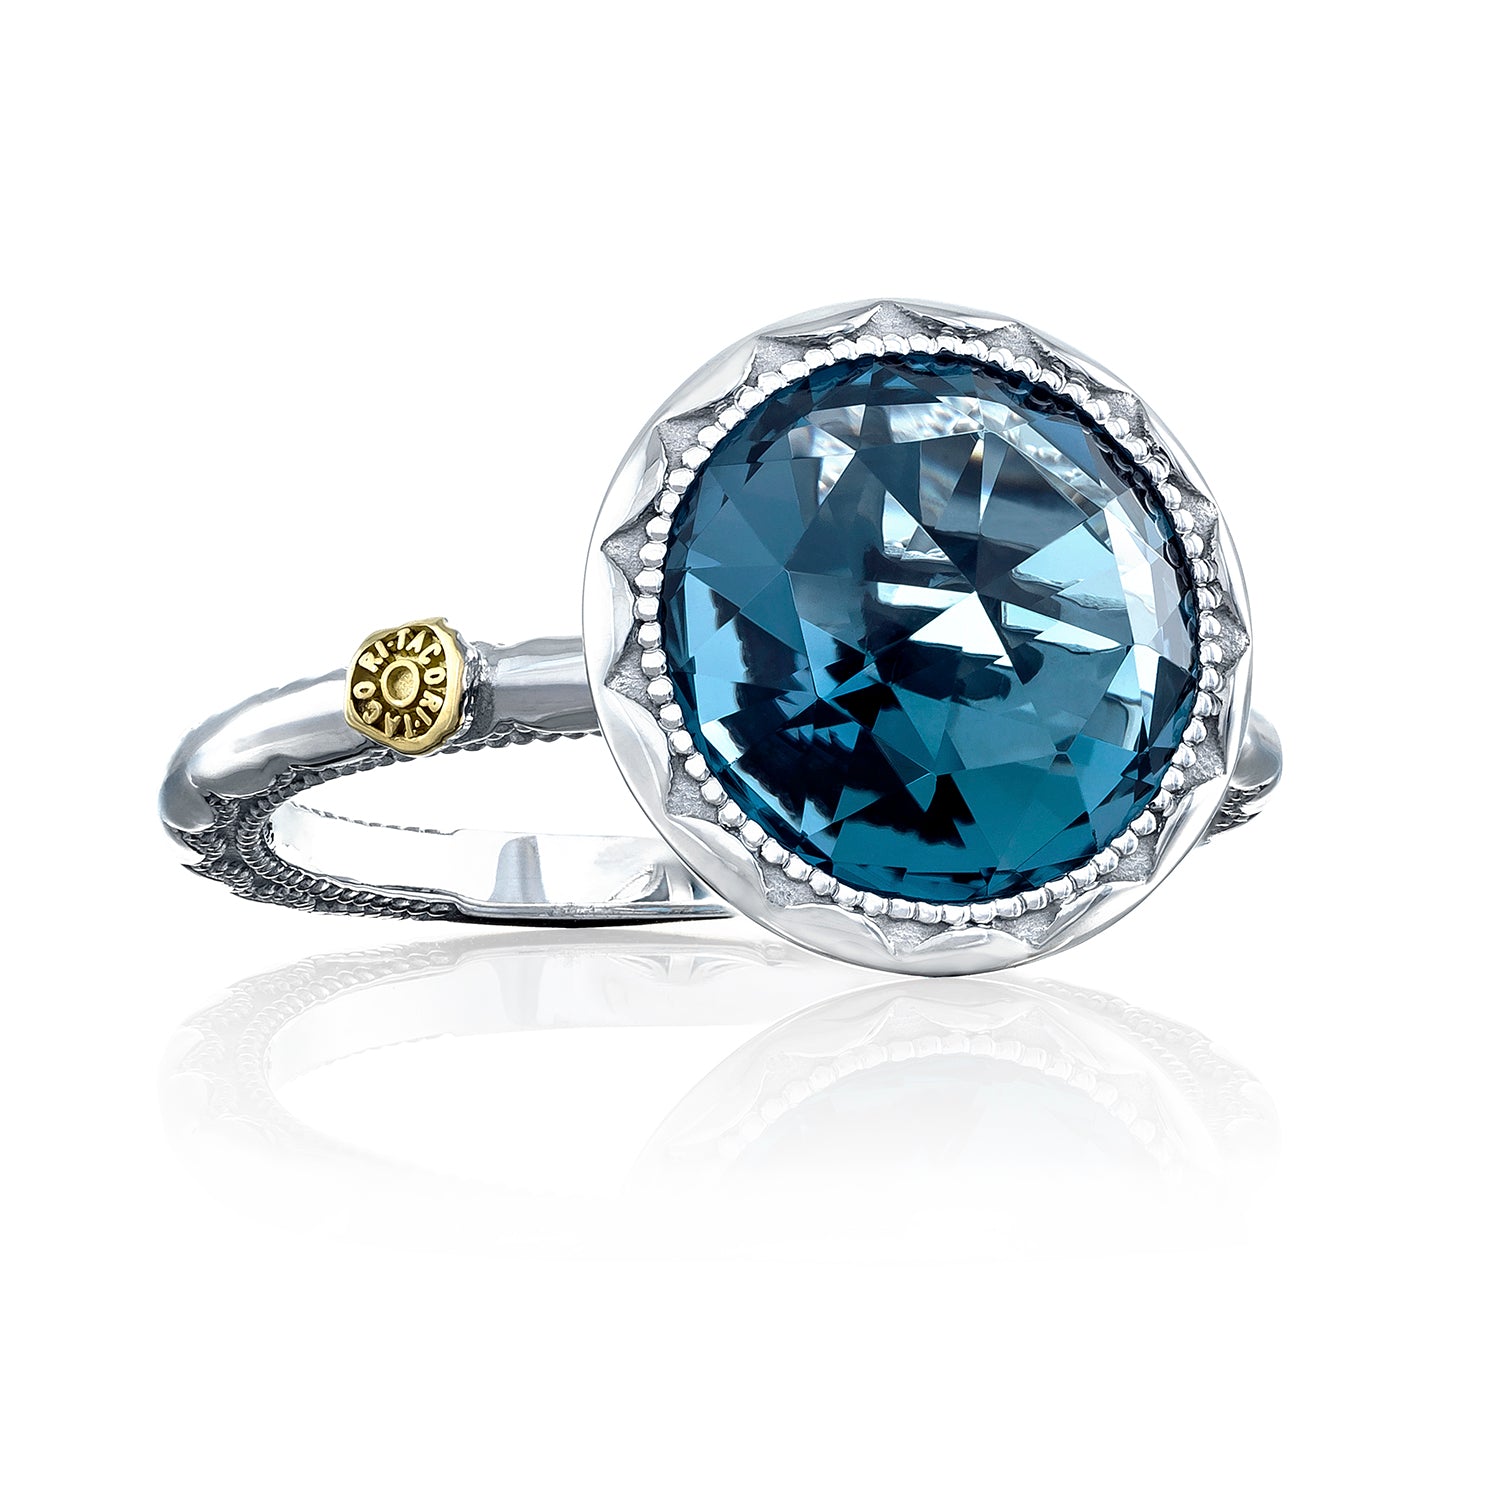 Tacori Crescent Bezel Ring featuring London Blue Topaz